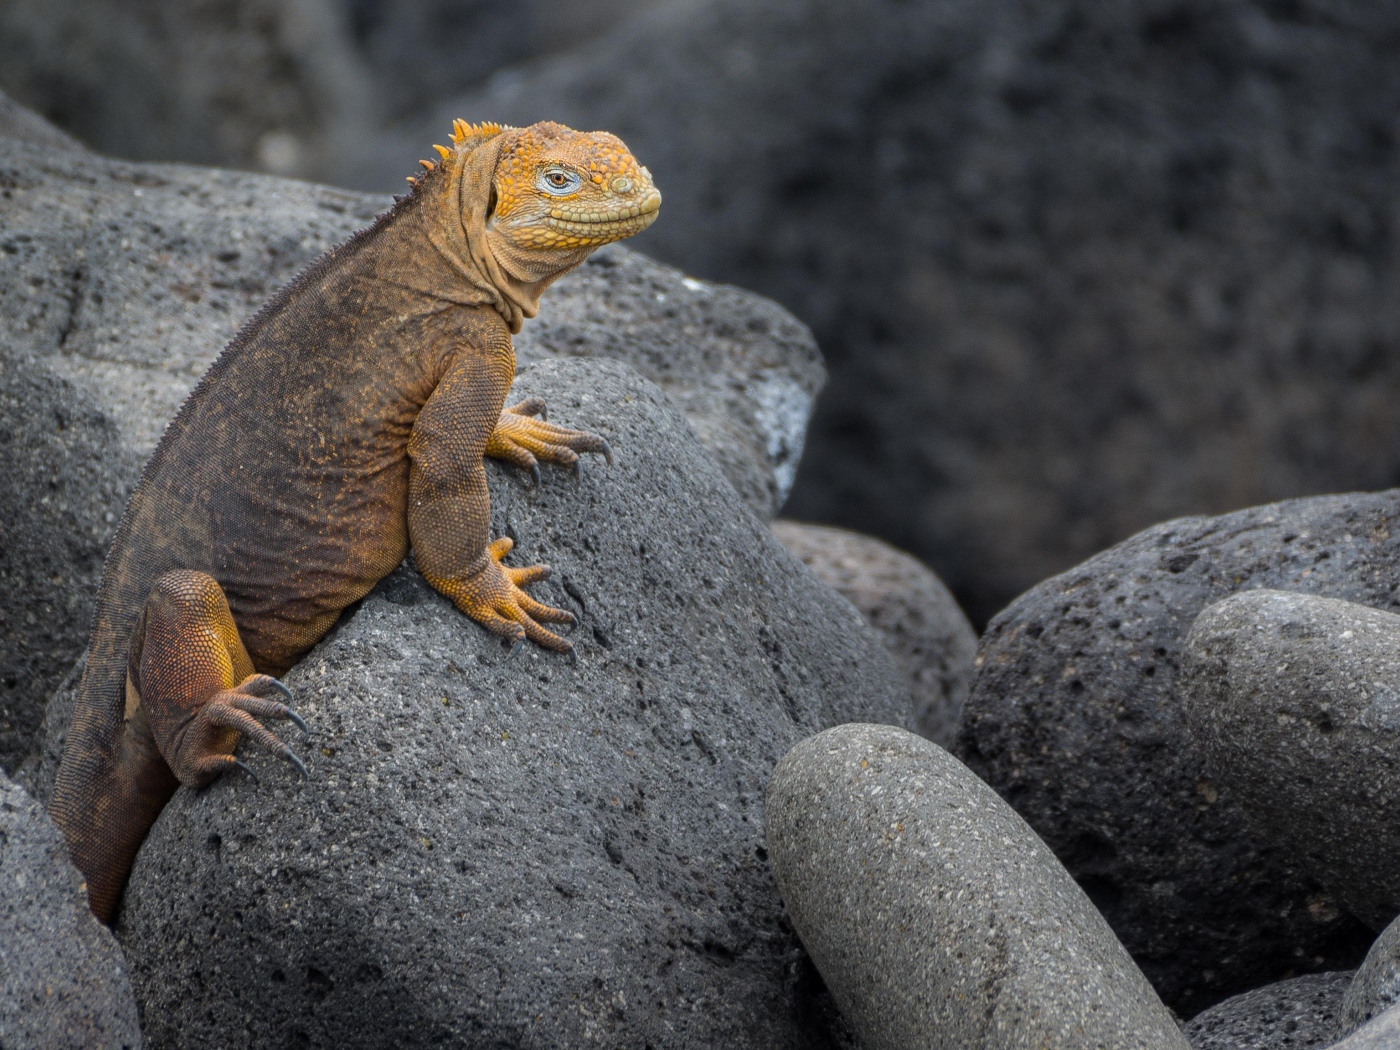 Big iguana sits on gray stones